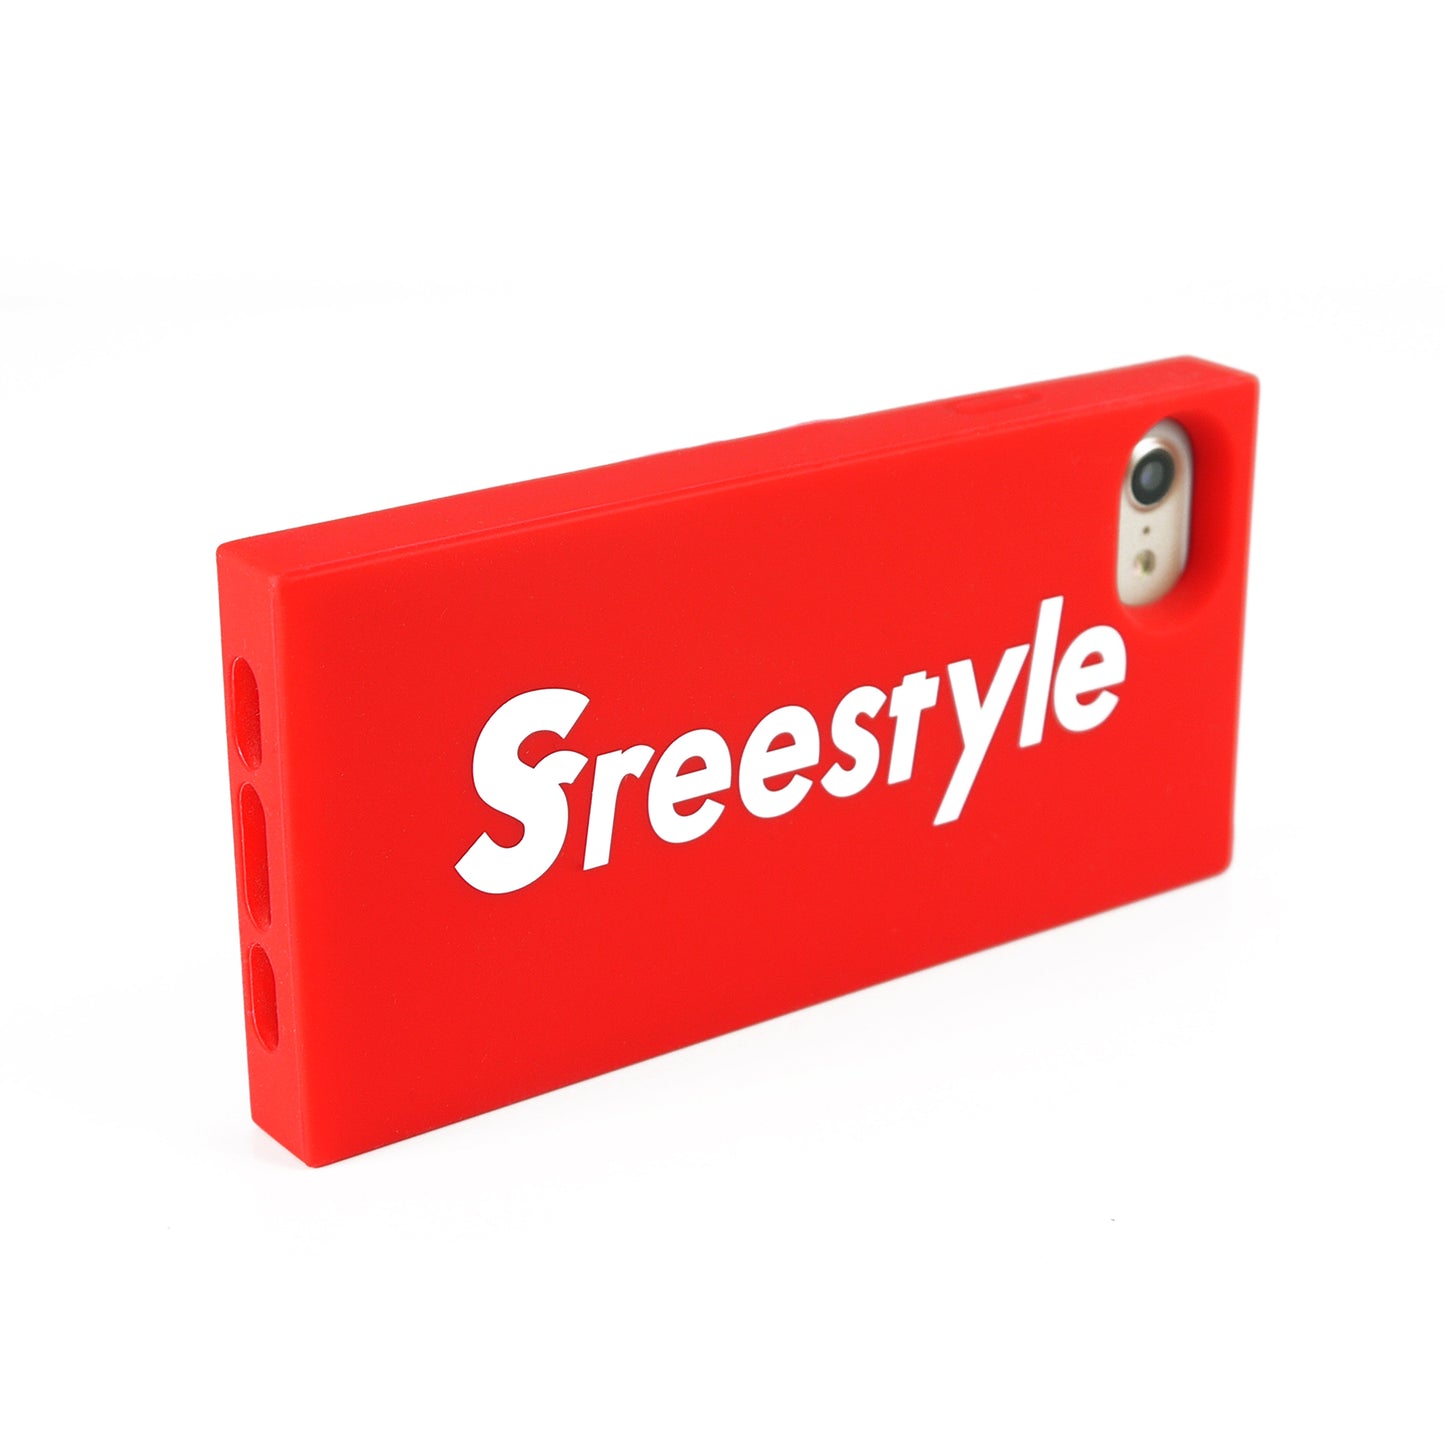 iPhone SE/7/8 Simple Case - Freestyle